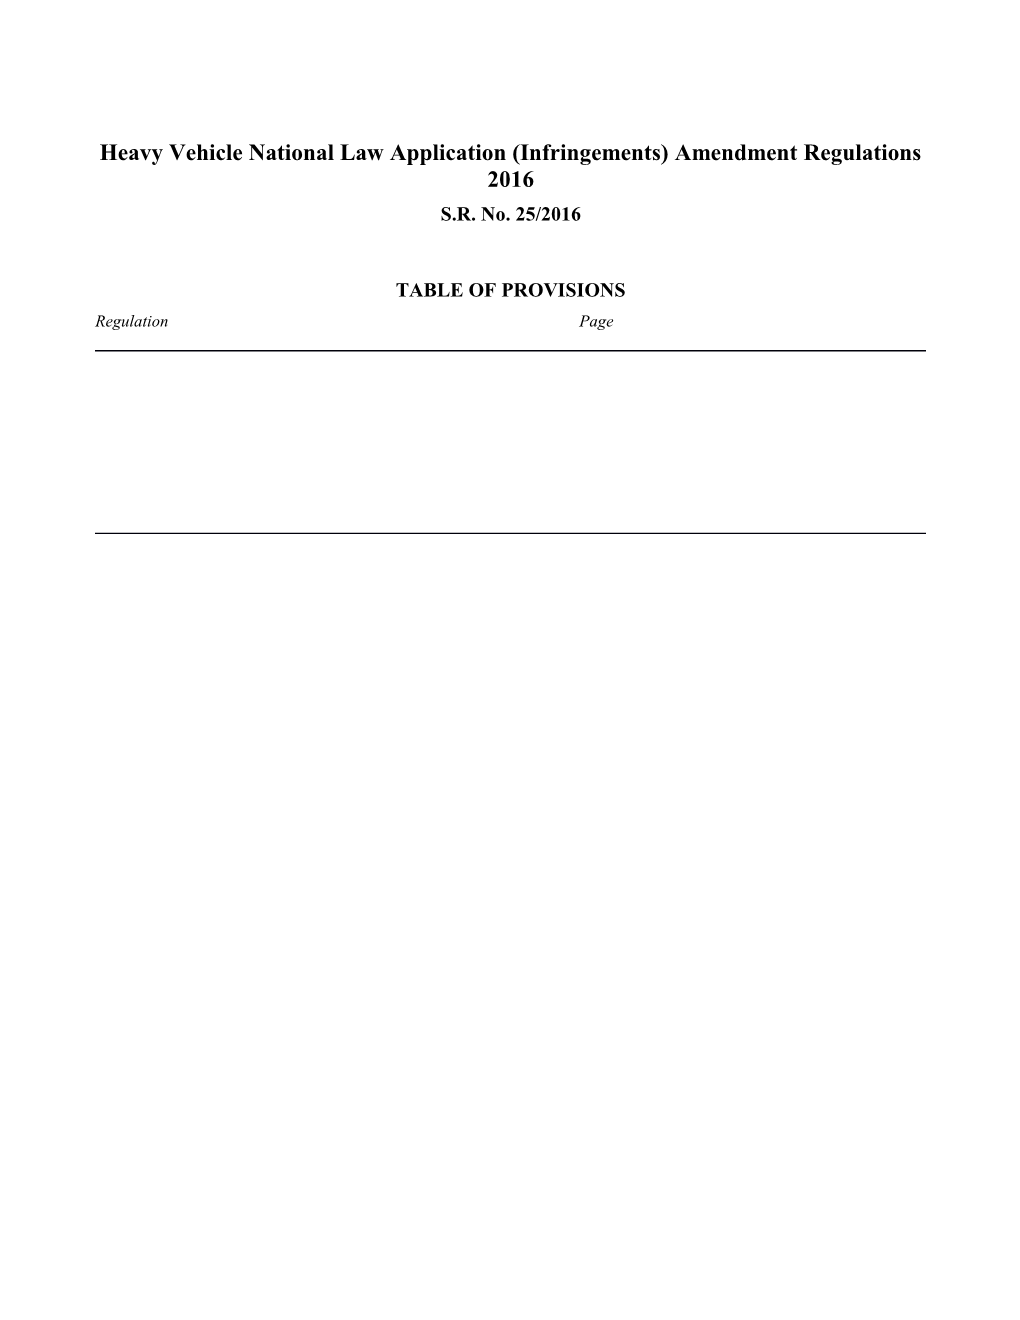 Heavy Vehicle National Law Application (Infringements) Amendment Regulations 2016